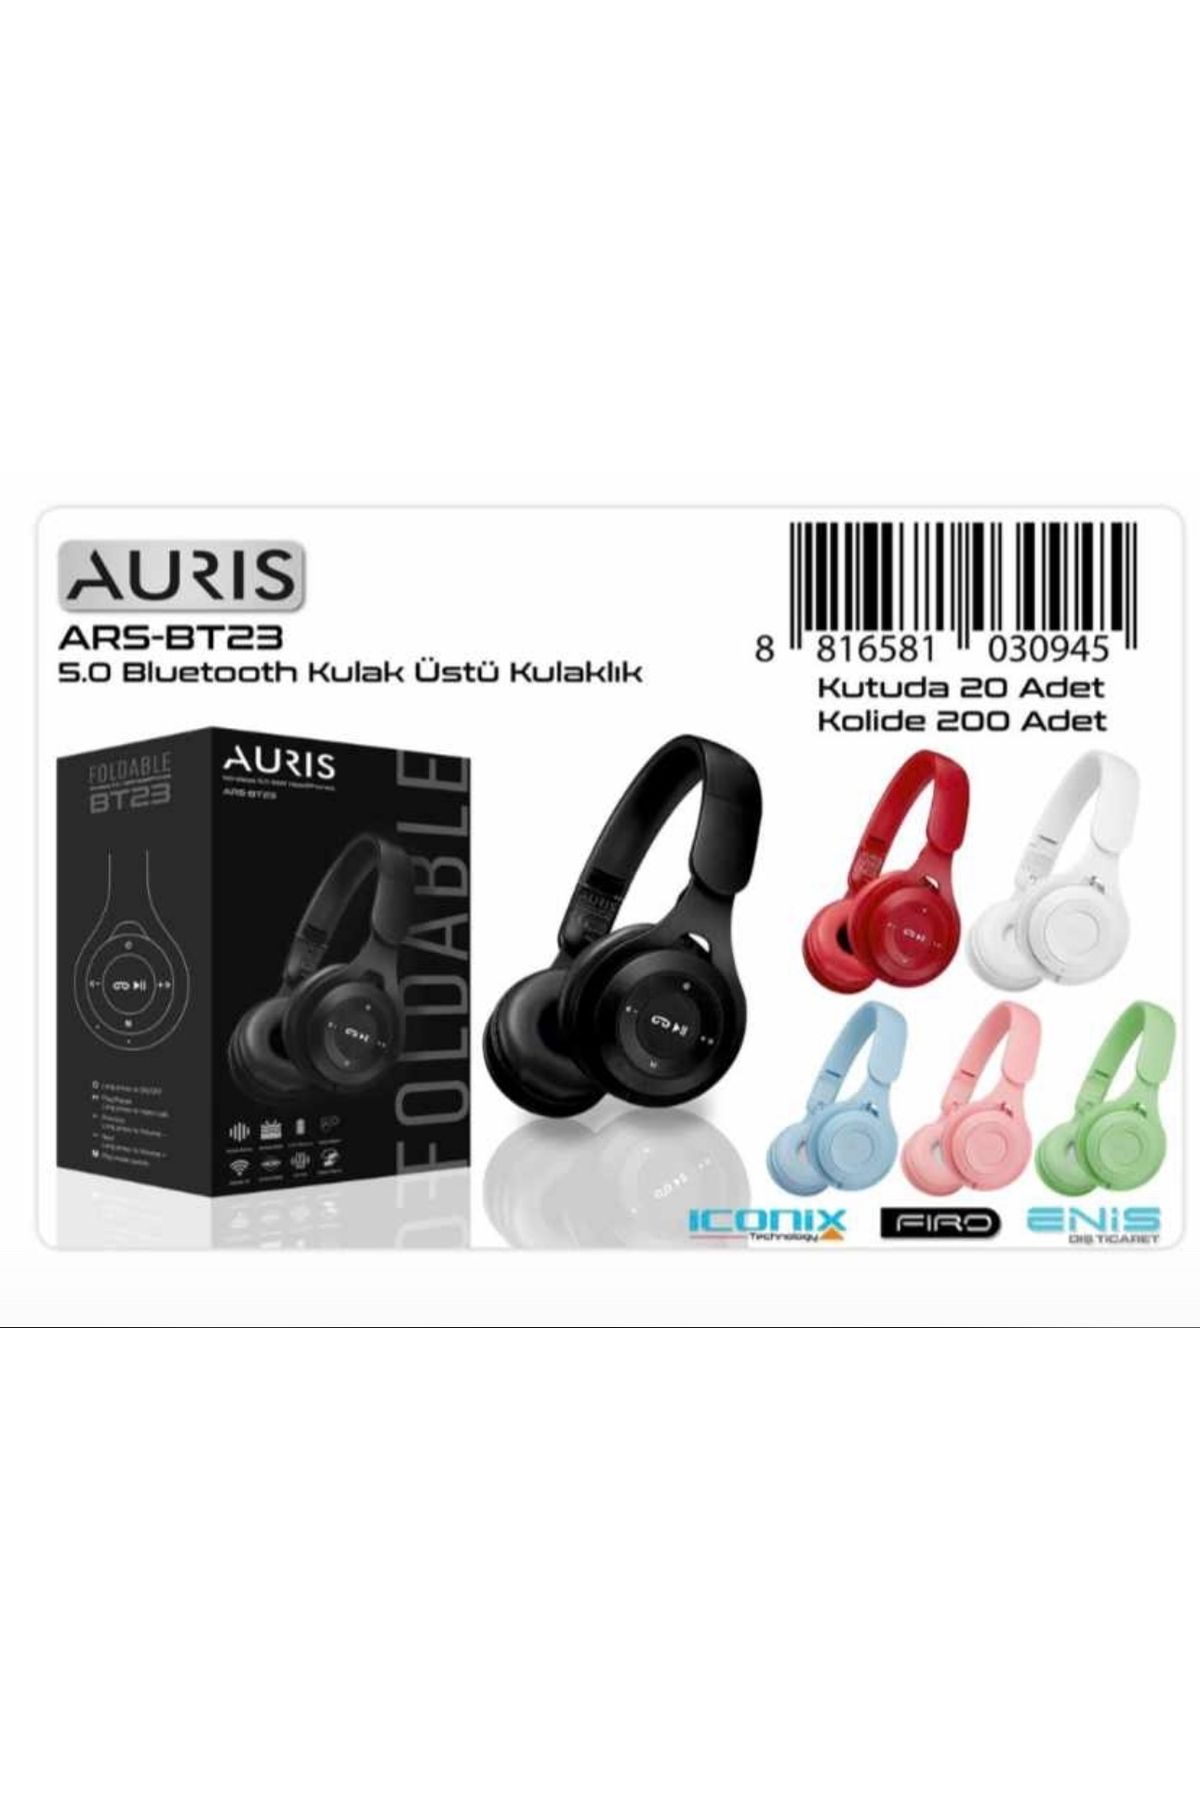 Auris AURİS 5.0 Bluetooth kulak üstü kulaklık